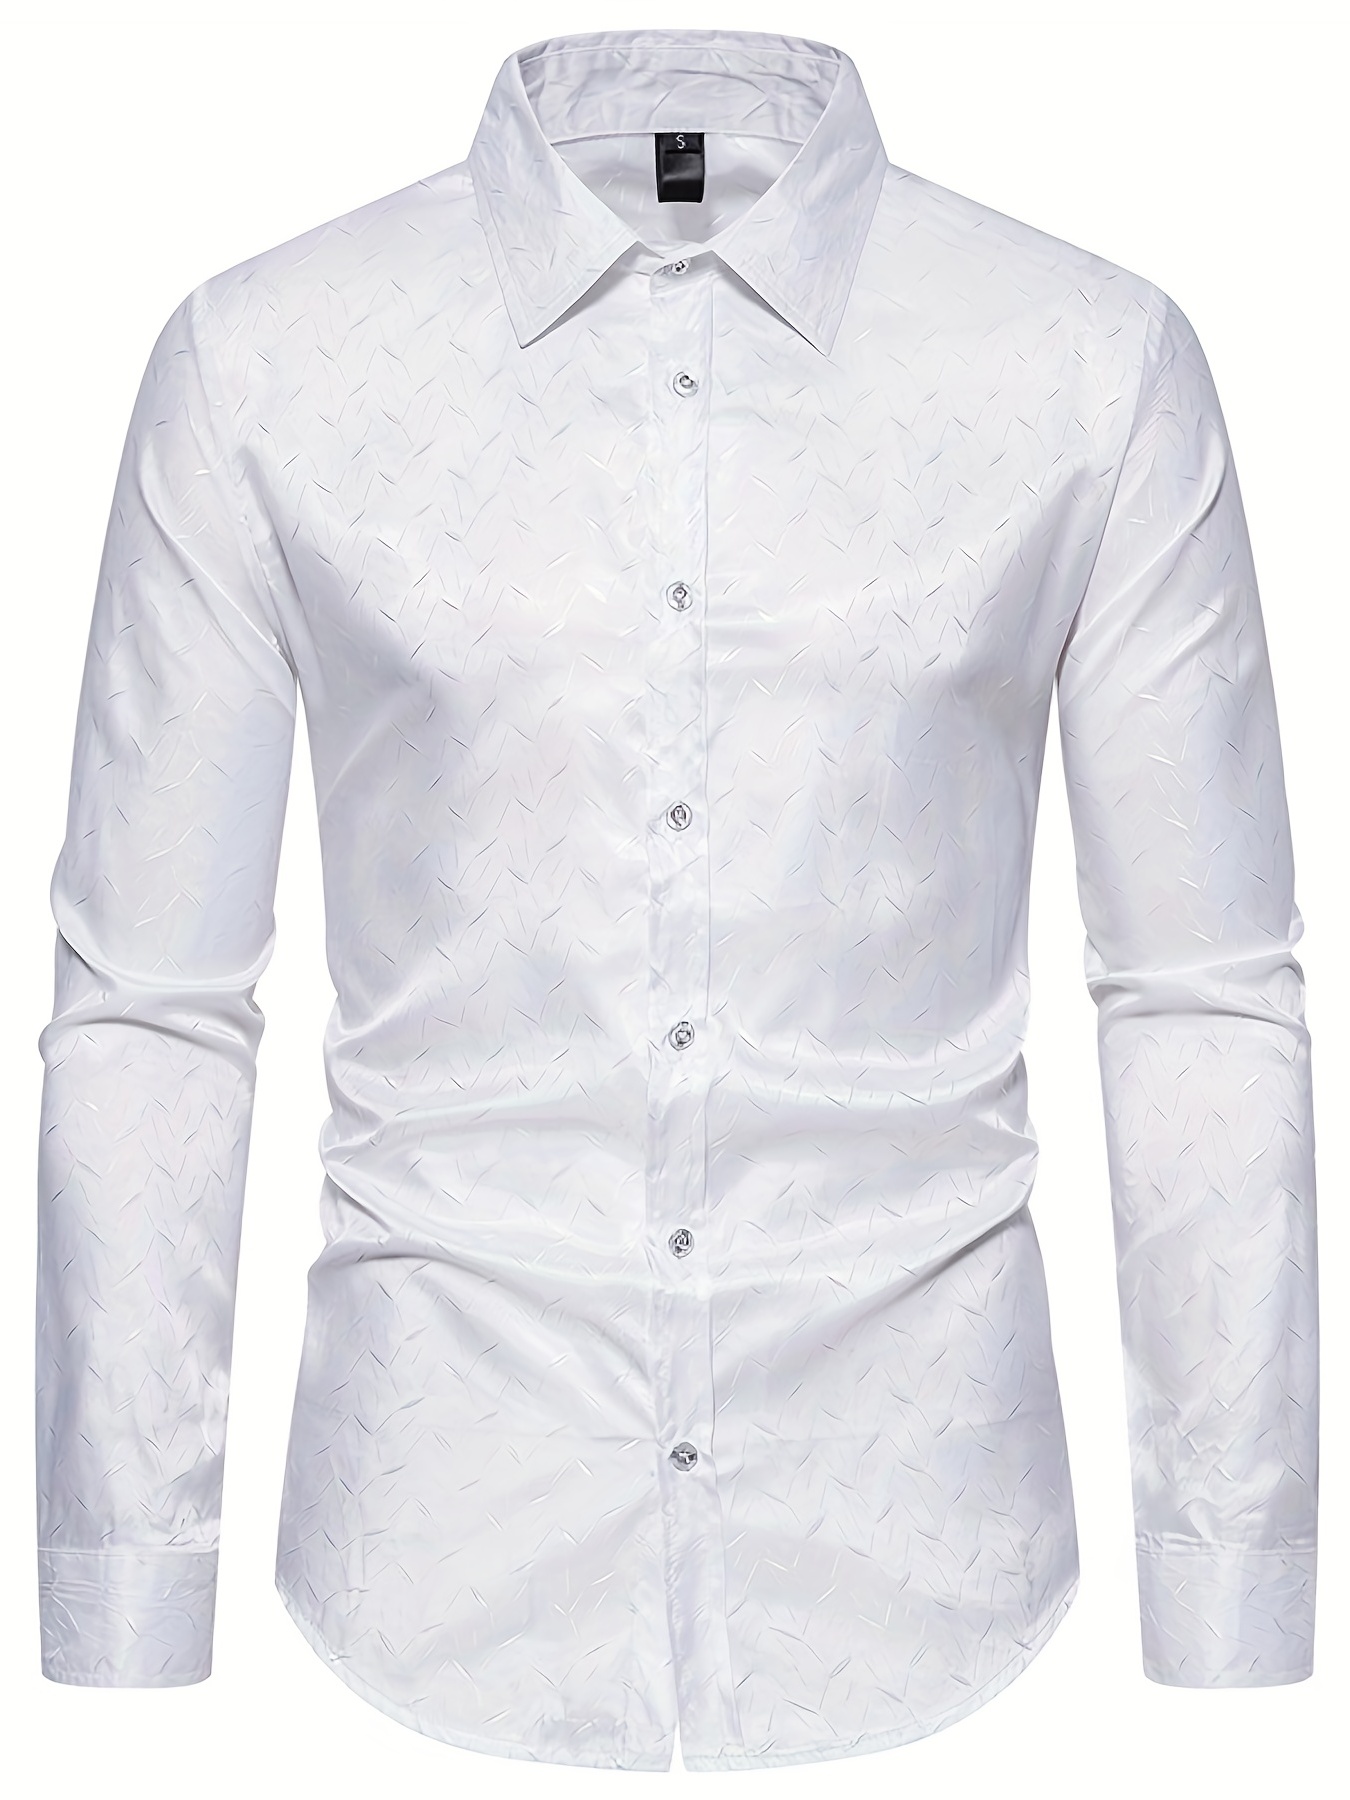 mens shirt top turn down collar long sleeve closure dress shirt casual shirt for men daily clubwear